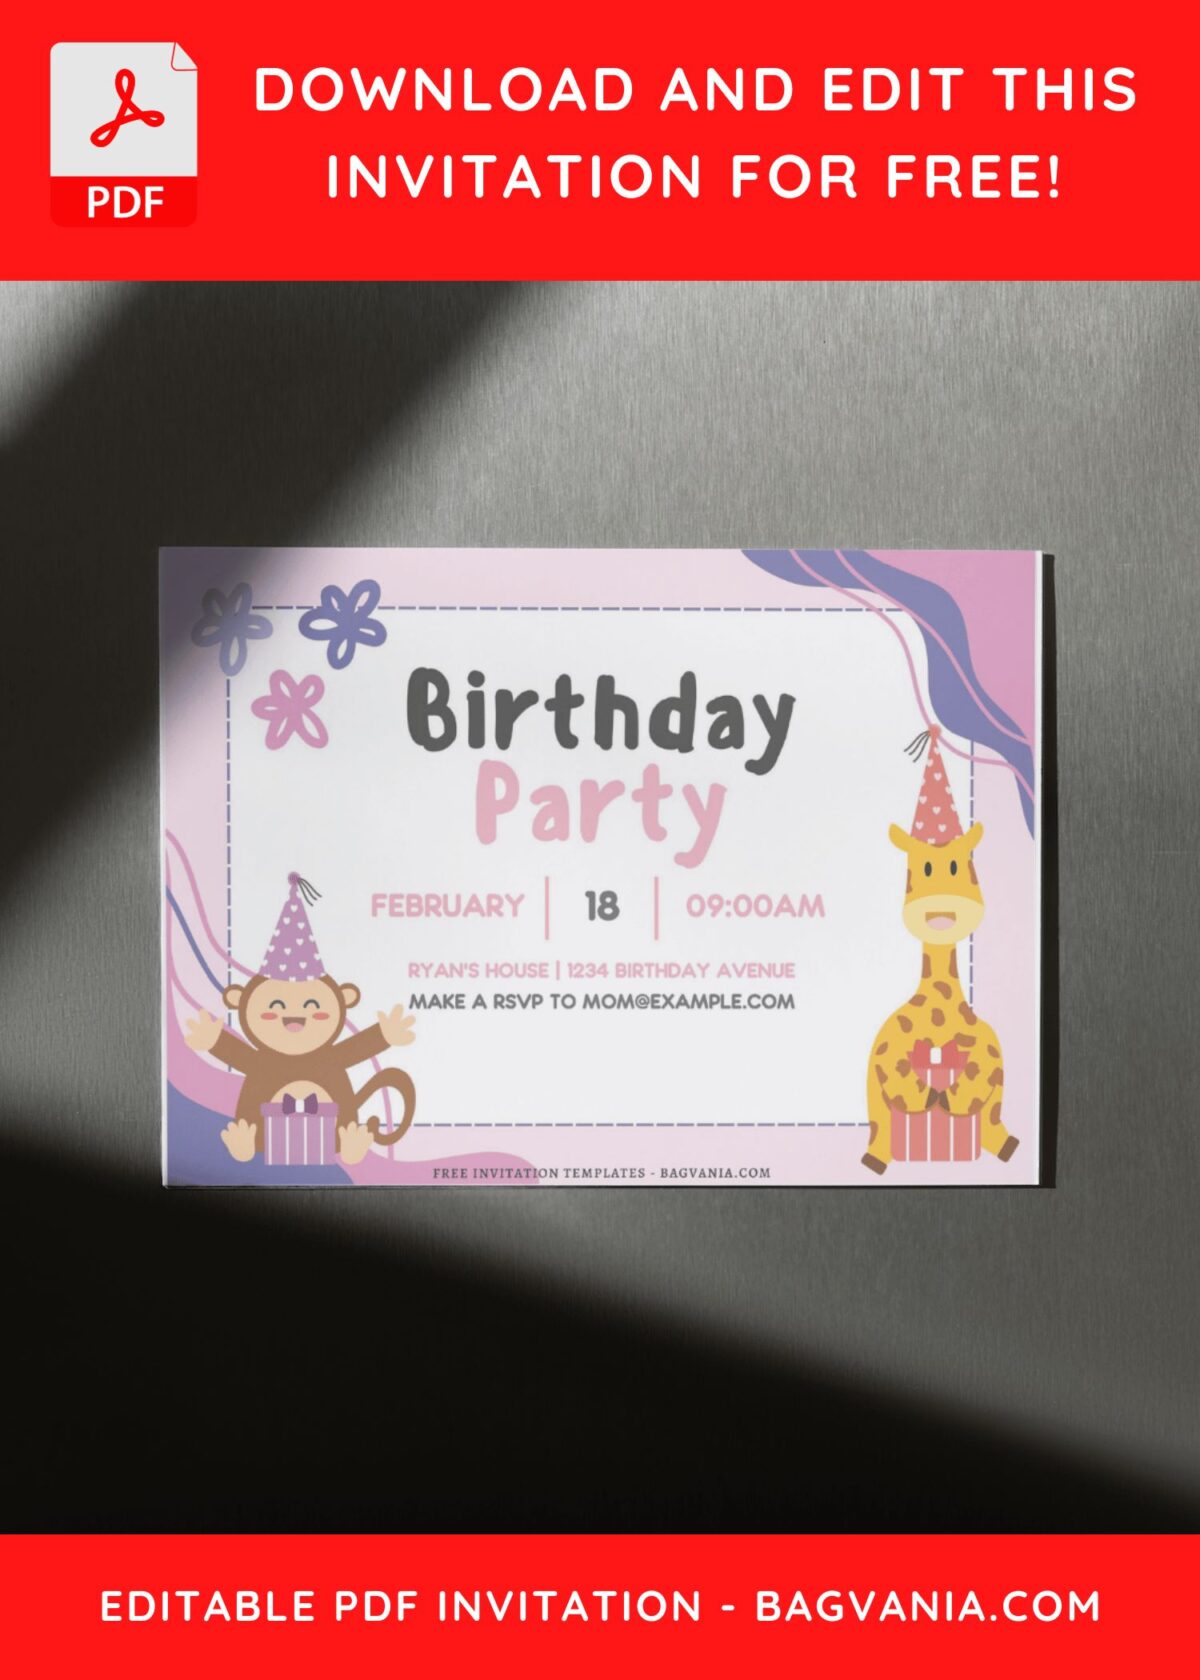 (Free Editable PDF) Joyful Party Animals Birthday Invitation Templates H